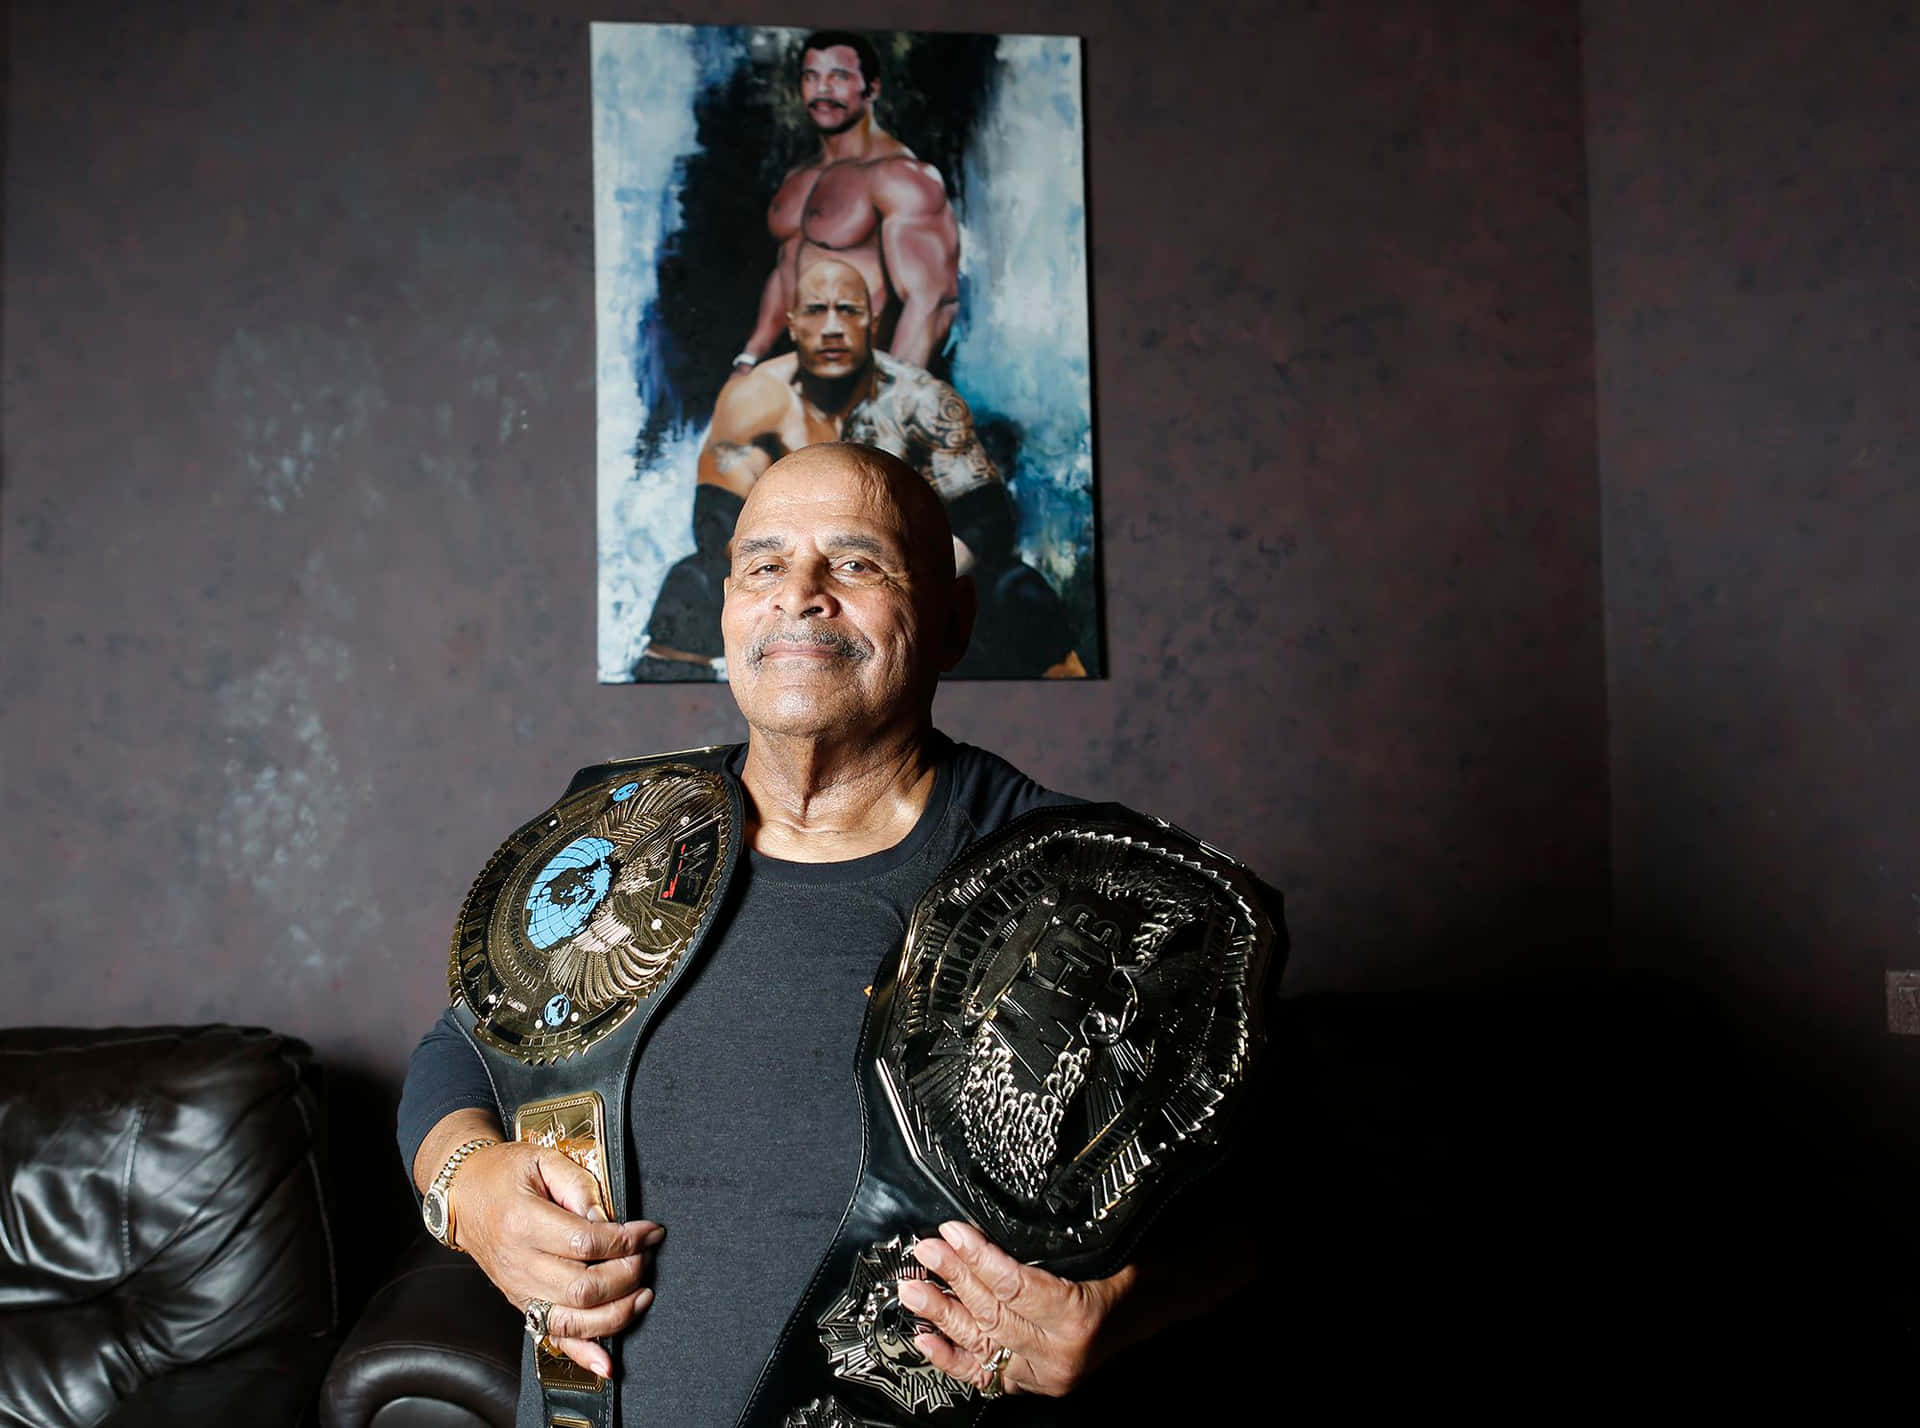 Rocky Johnson holder to Champion bælter imod en Mursten væg Wallpaper